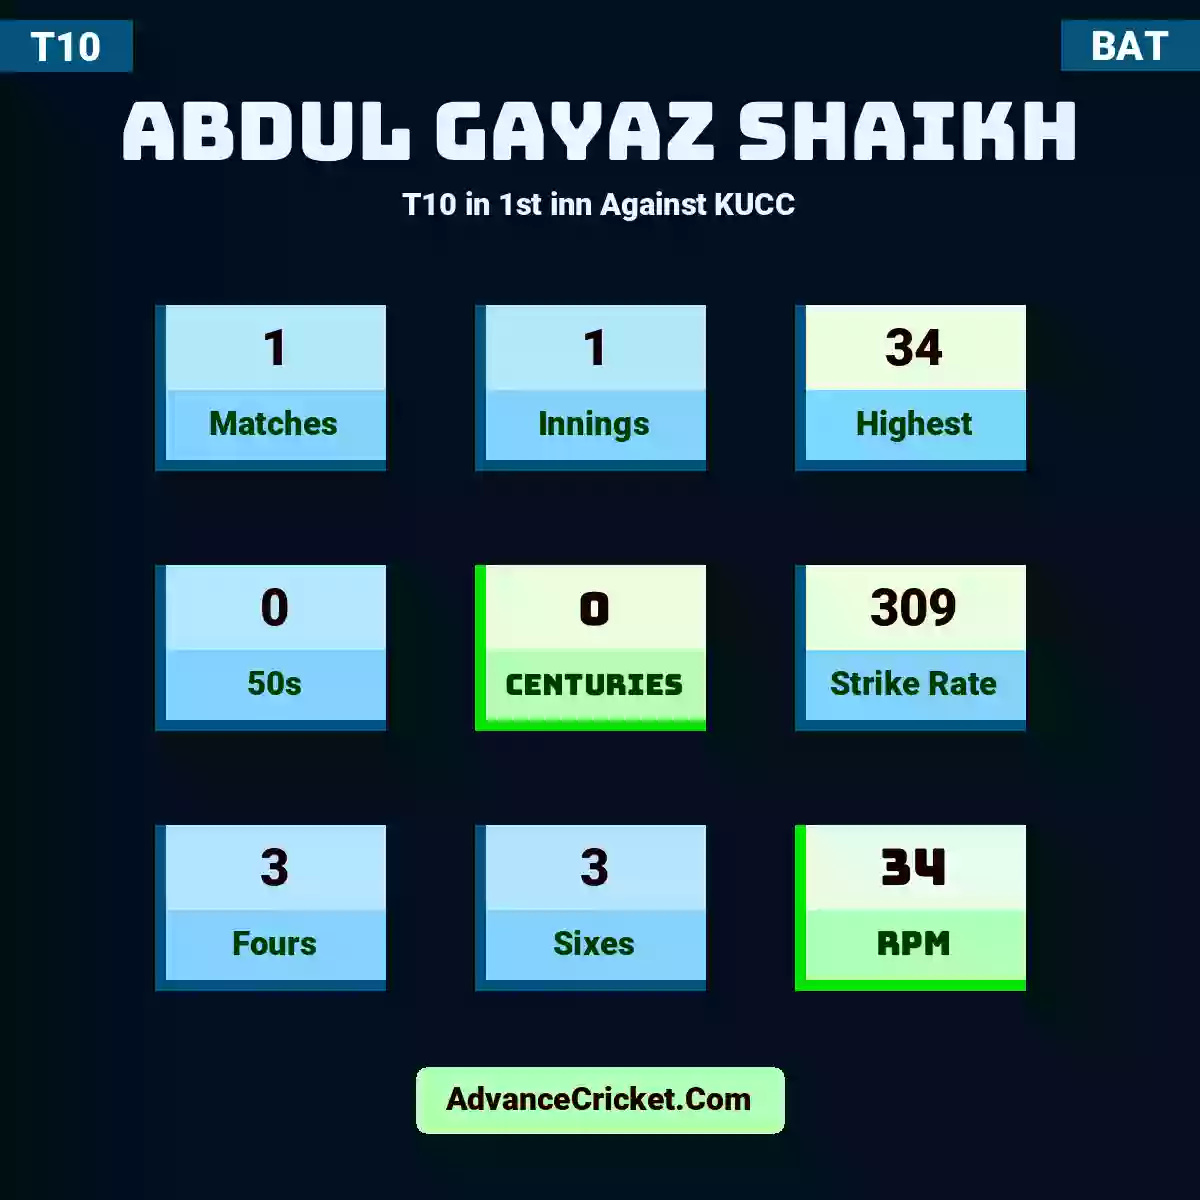 Abdul Gayaz Shaikh T10  in 1st inn Against KUCC, Abdul Gayaz Shaikh played 1 matches, scored 34 runs as highest, 0 half-centuries, and 0 centuries, with a strike rate of 309. A.Gayaz.Shaikh hit 3 fours and 3 sixes, with an RPM of 34.